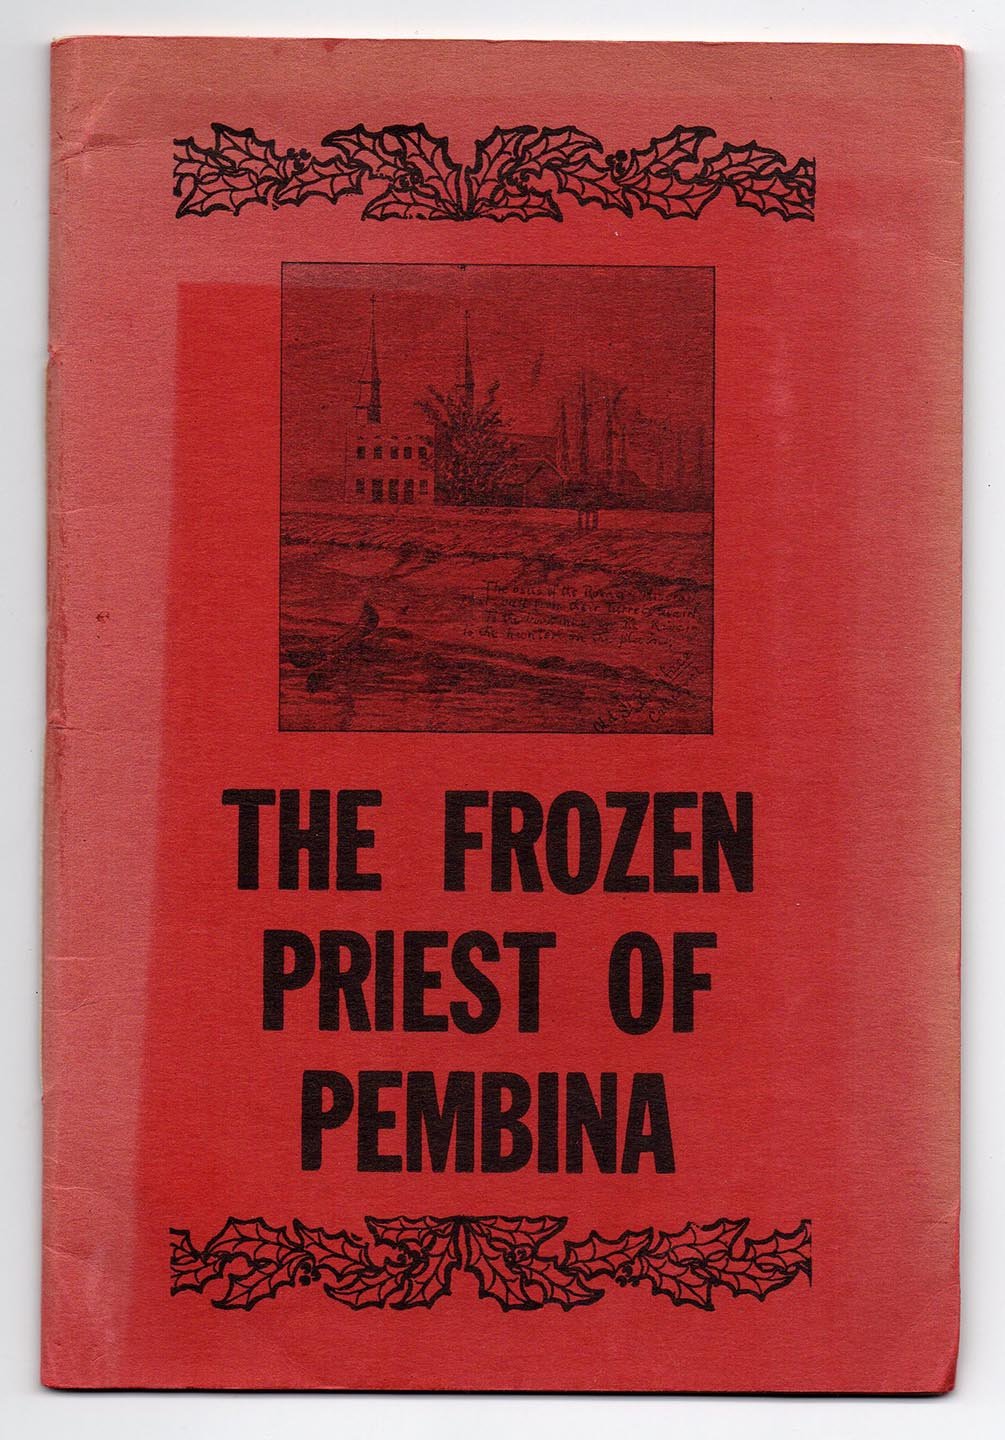 The Frozen Priest of Pembina